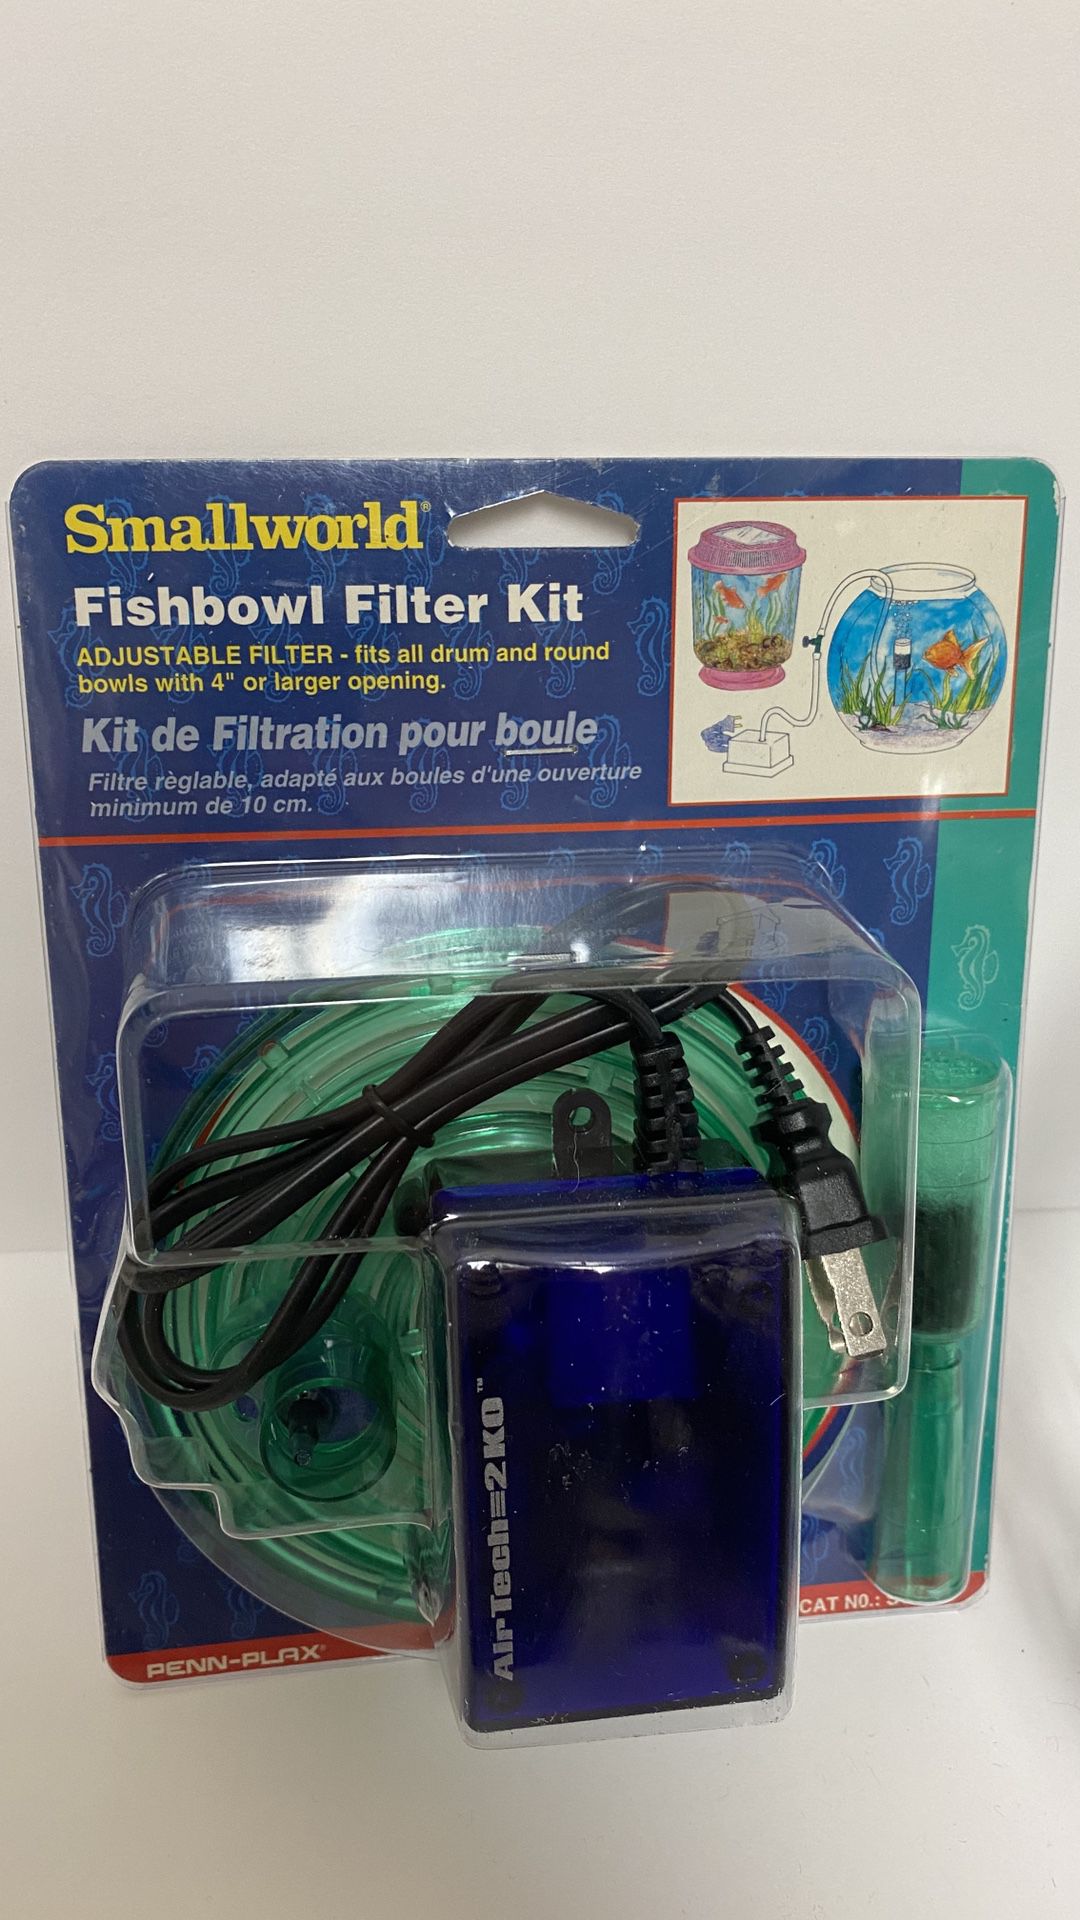 Small world fish bowl starter kit